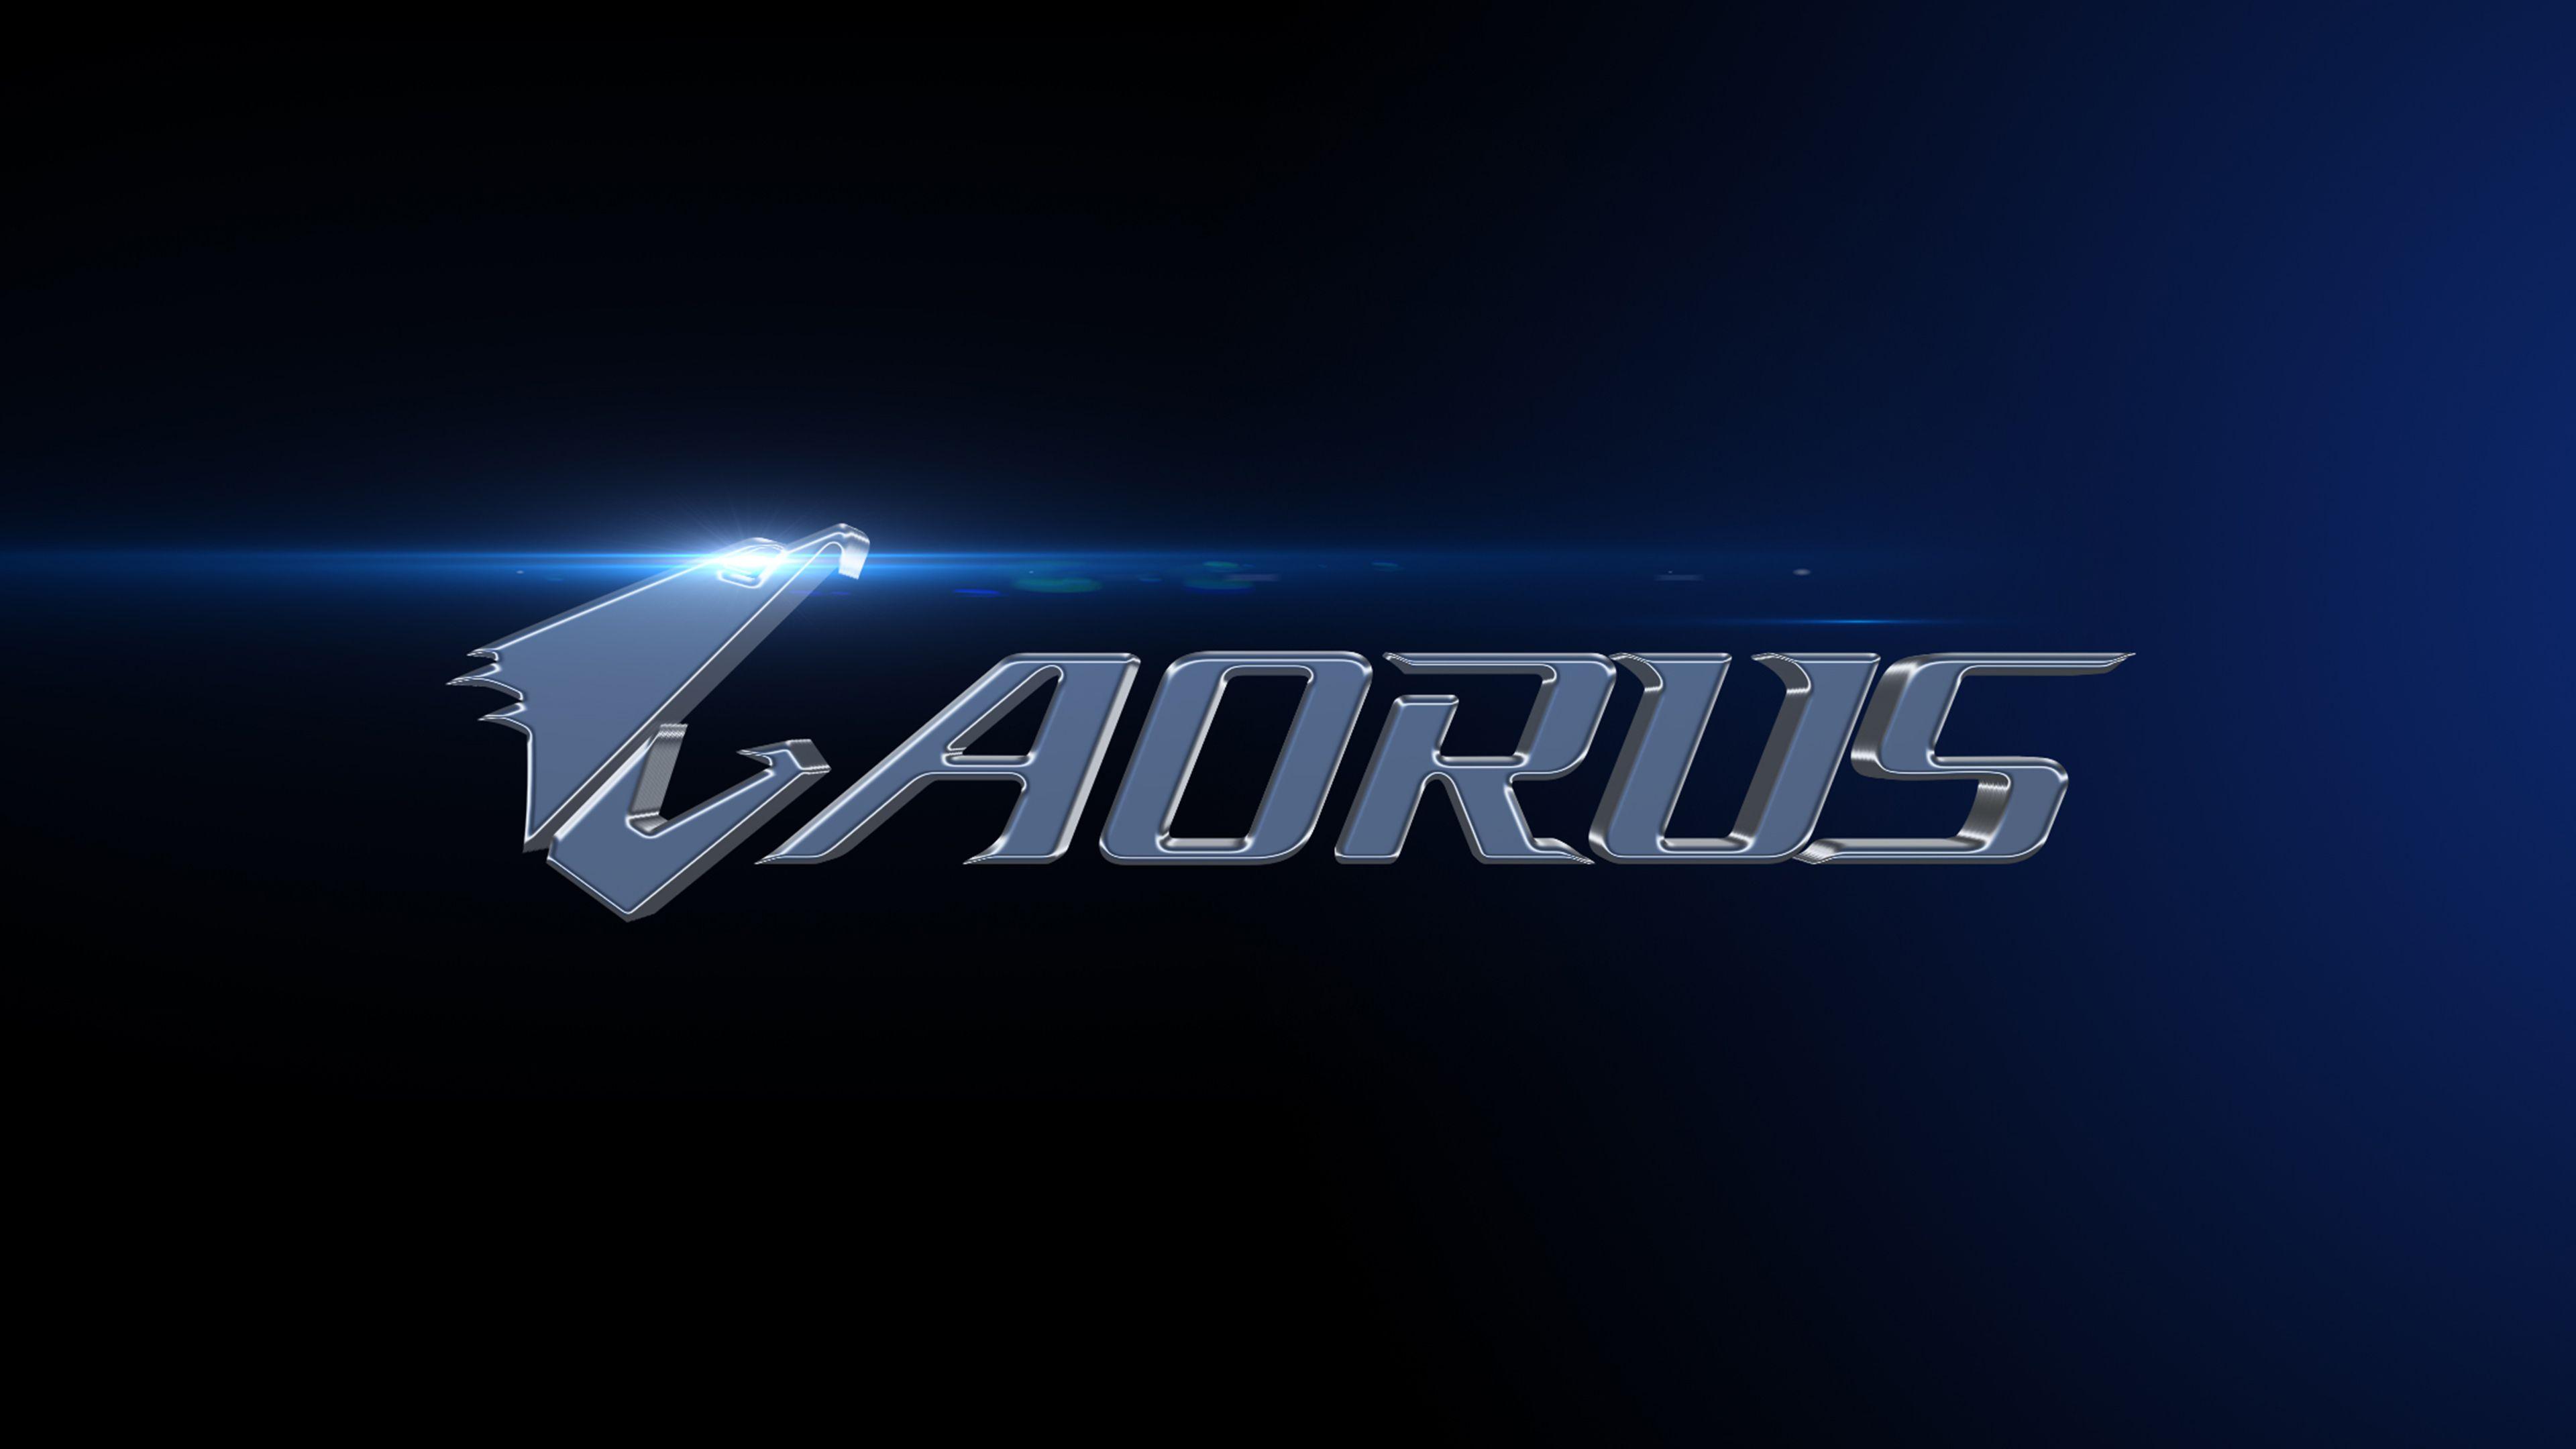 Download wallpapers Aorus blue logo 4k blue brickwall Aorus logo  brands Aorus Gigabyte Aorus neon logo Aorus for desktop with resolution  3840x2400 High Quality HD pictures wallpapers